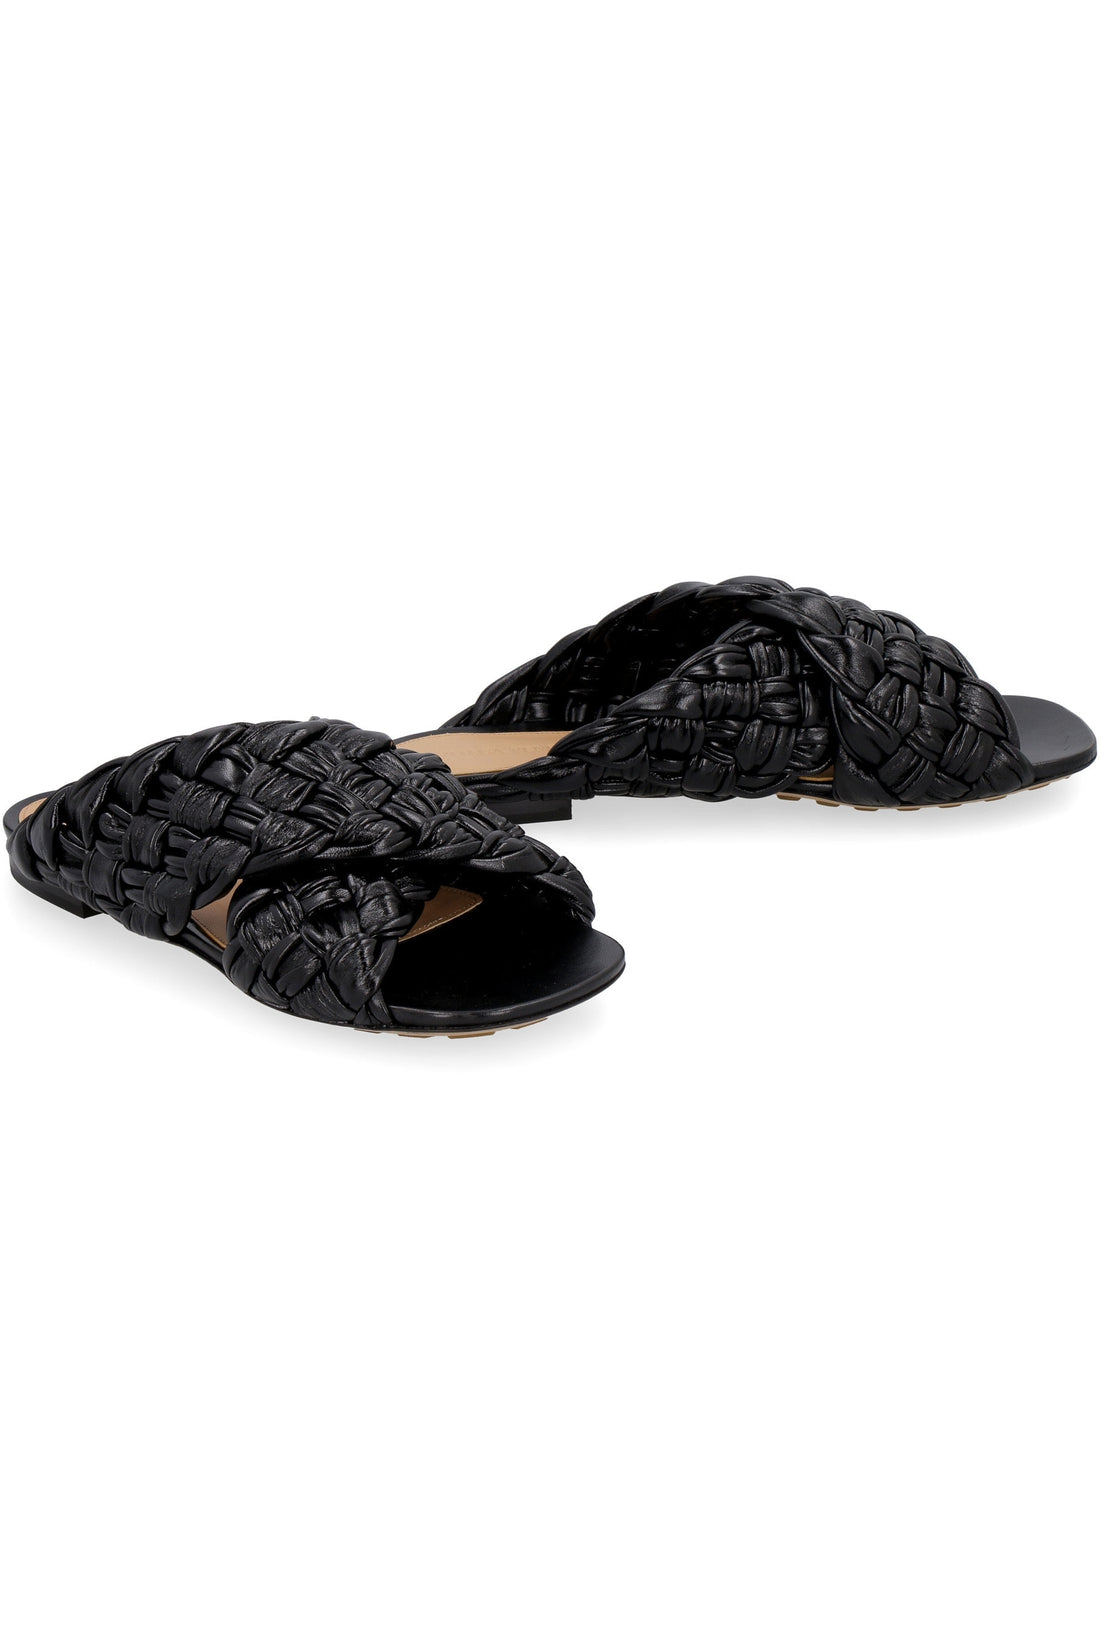 Bottega Veneta-OUTLET-SALE-BV Board leather flat sandals-ARCHIVIST